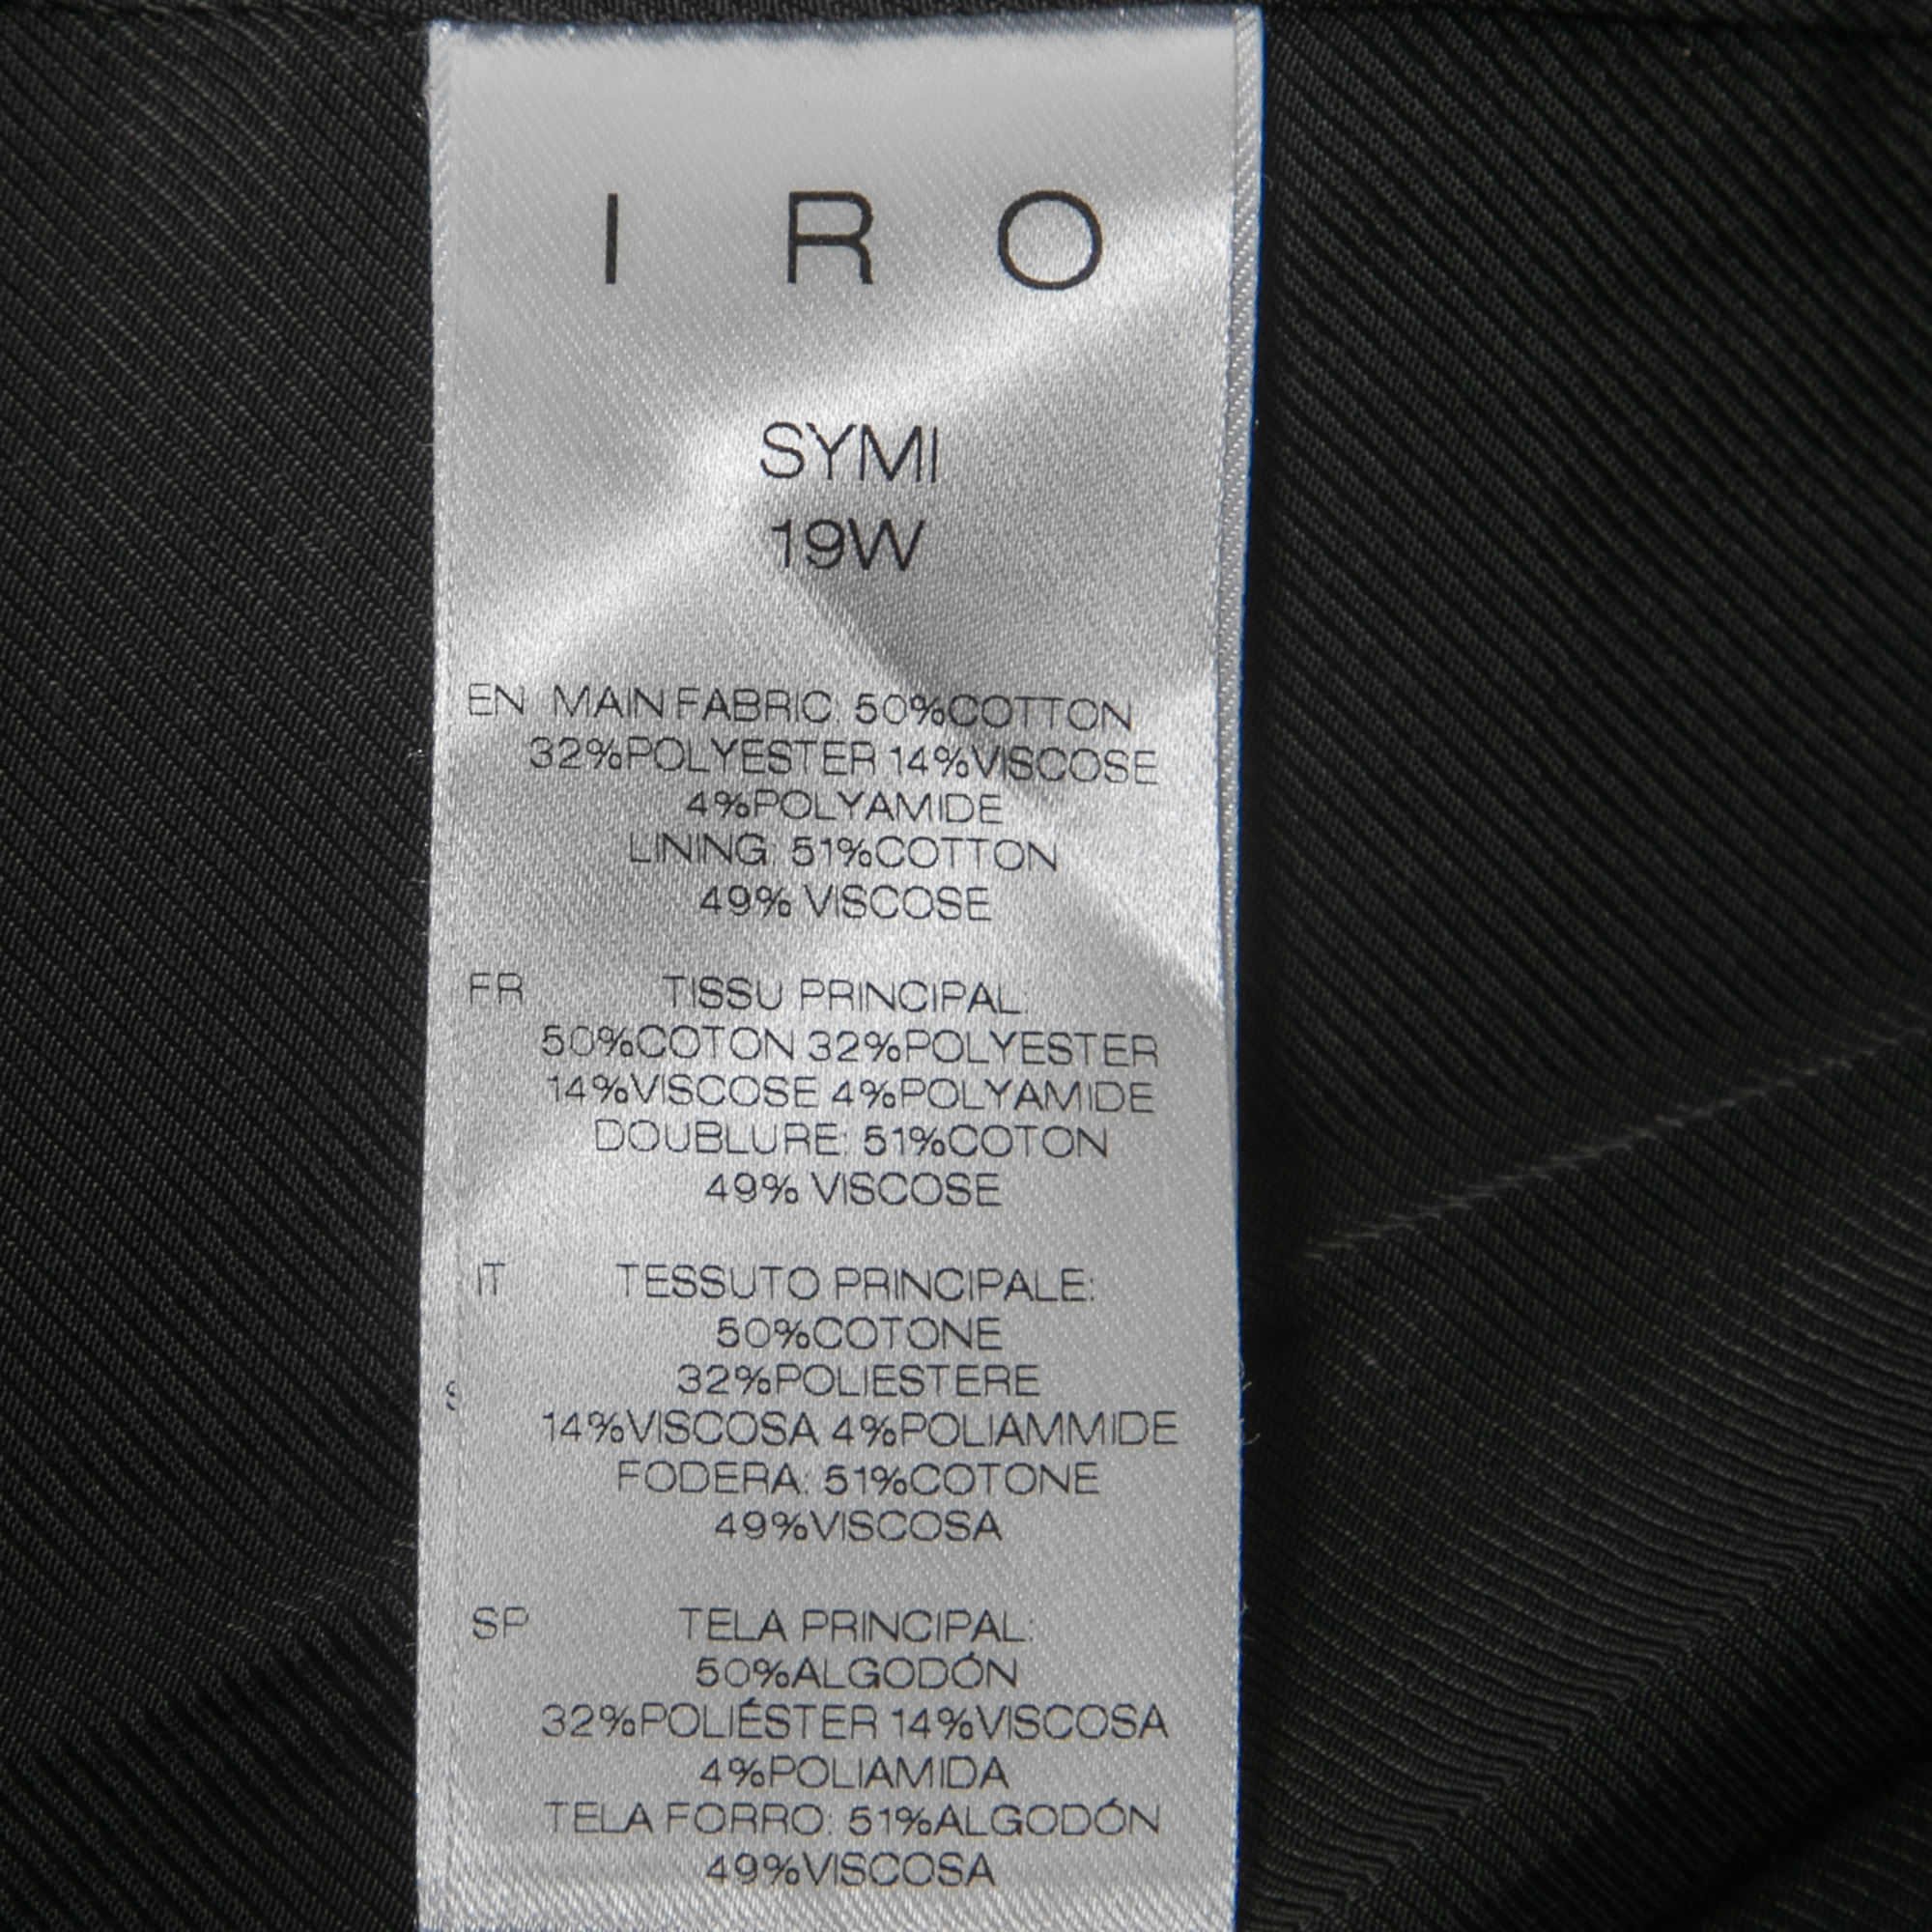 IRO Black Houndstooth Cotton Blend Single Breasted Symi Jacket S